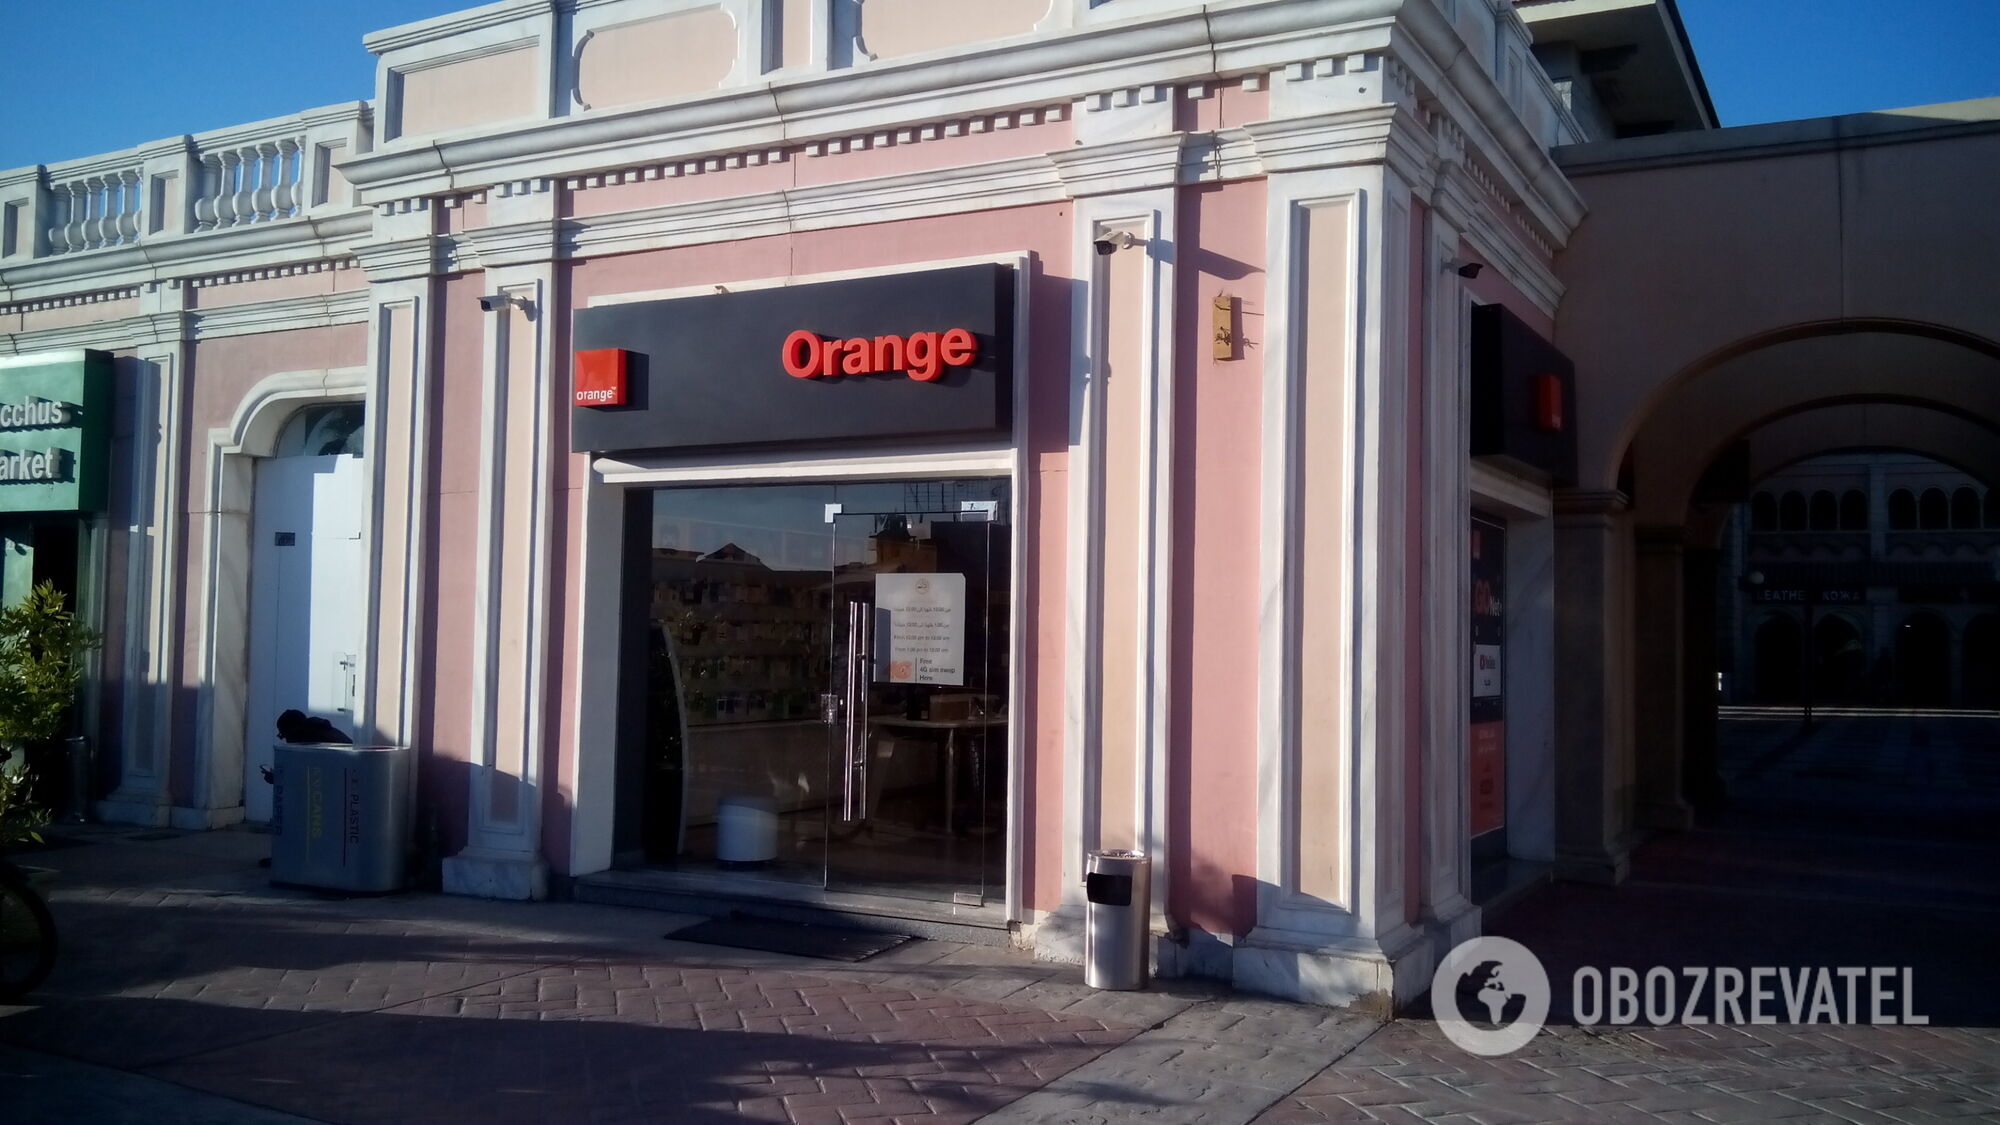 Офис Orange в El Merkato - Шарм-эш-Шейх, Египет